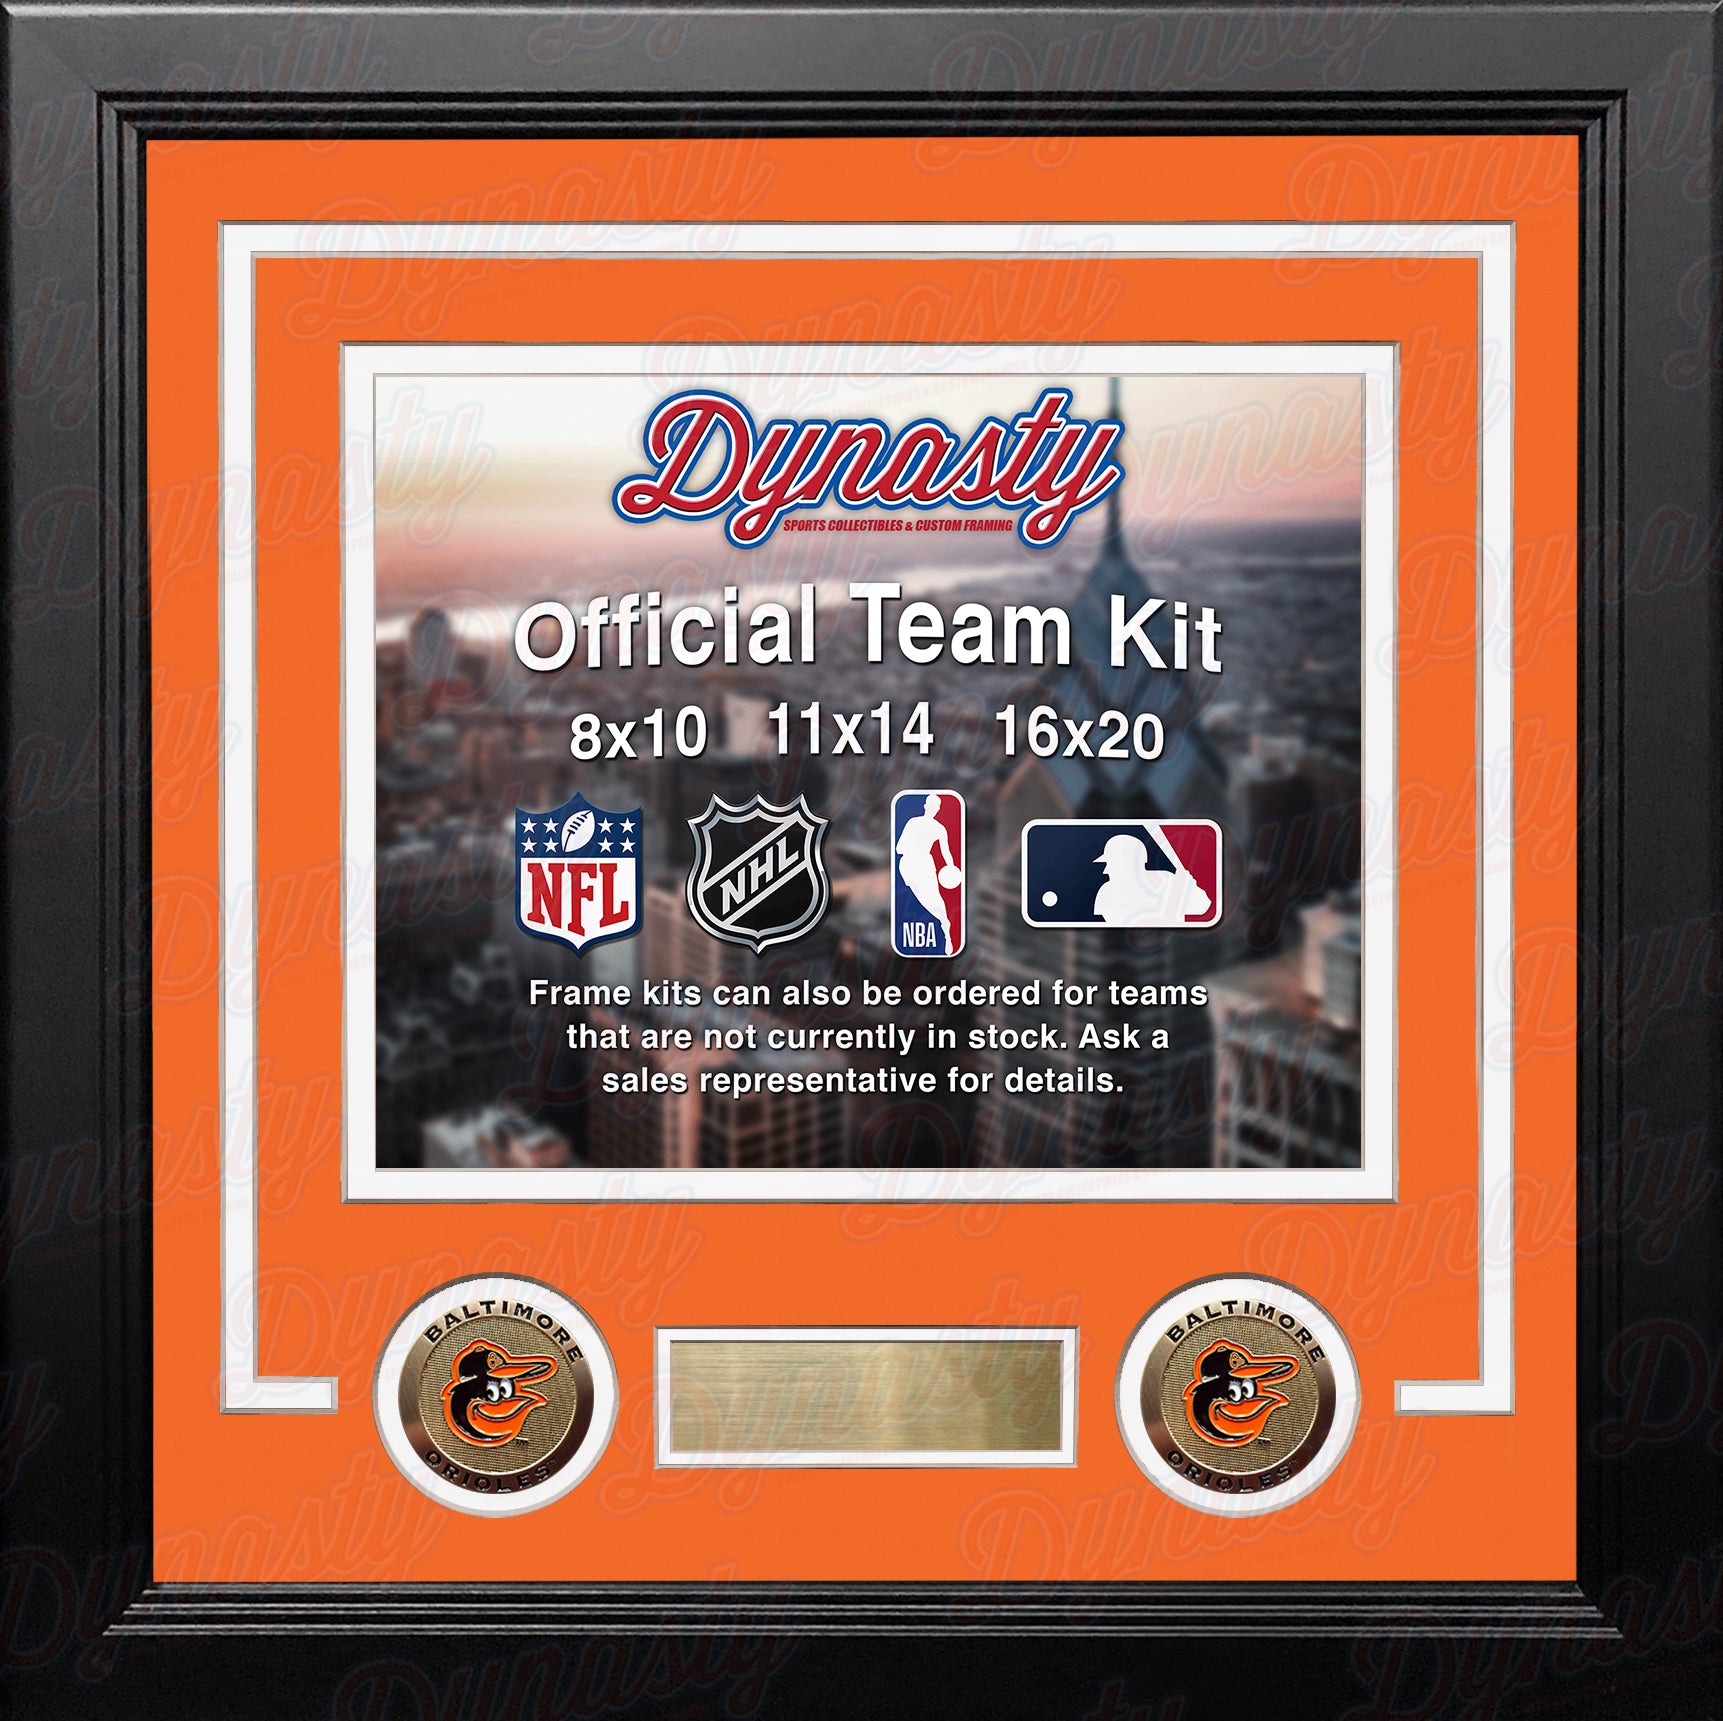 MLB Baseball Photo Picture Frame Kit - Baltimore Orioles (Orange Matting, White Trim) - Dynasty Sports & Framing 